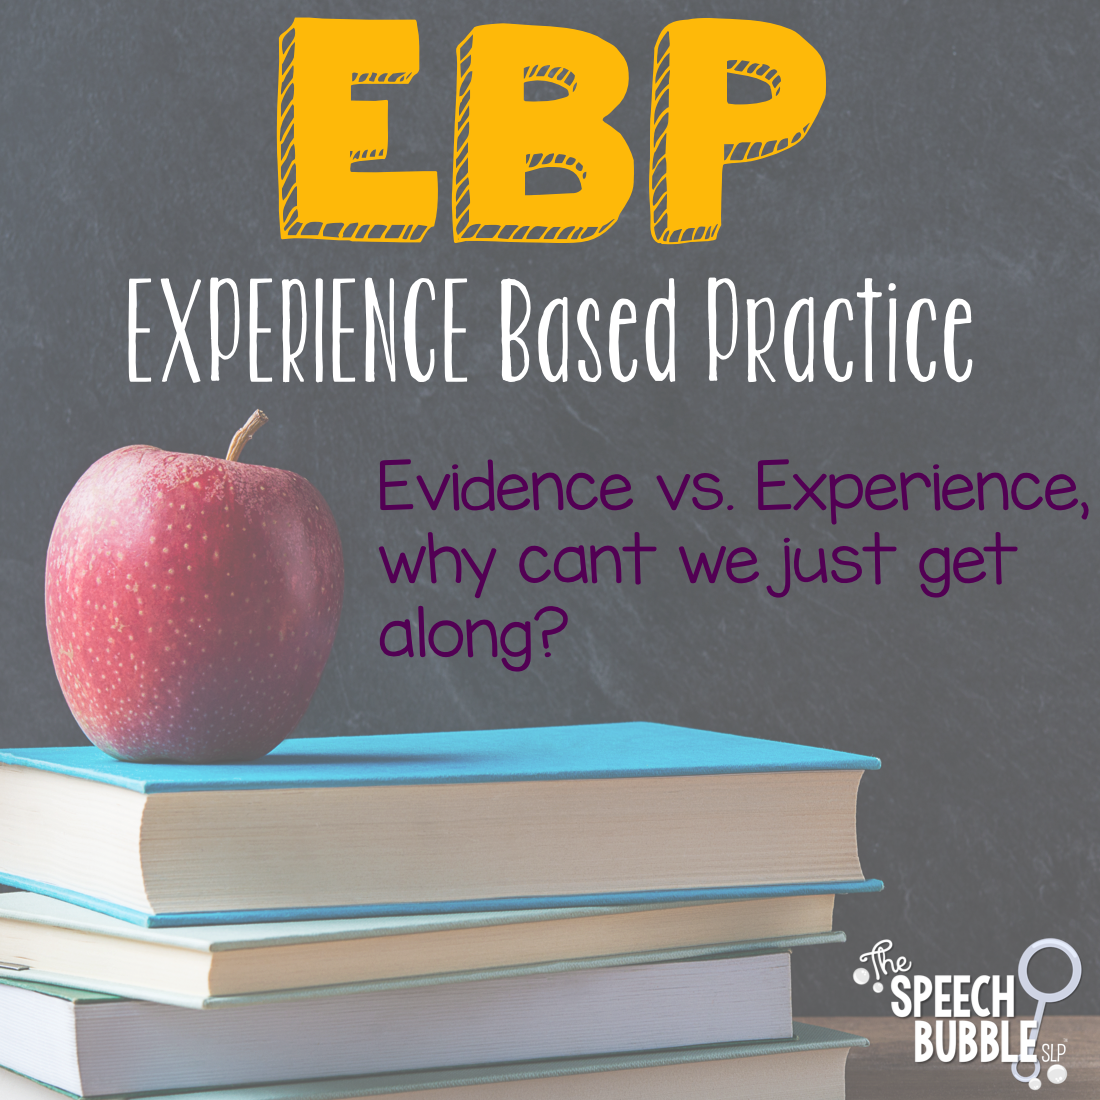 EBP: Experience Based Practice